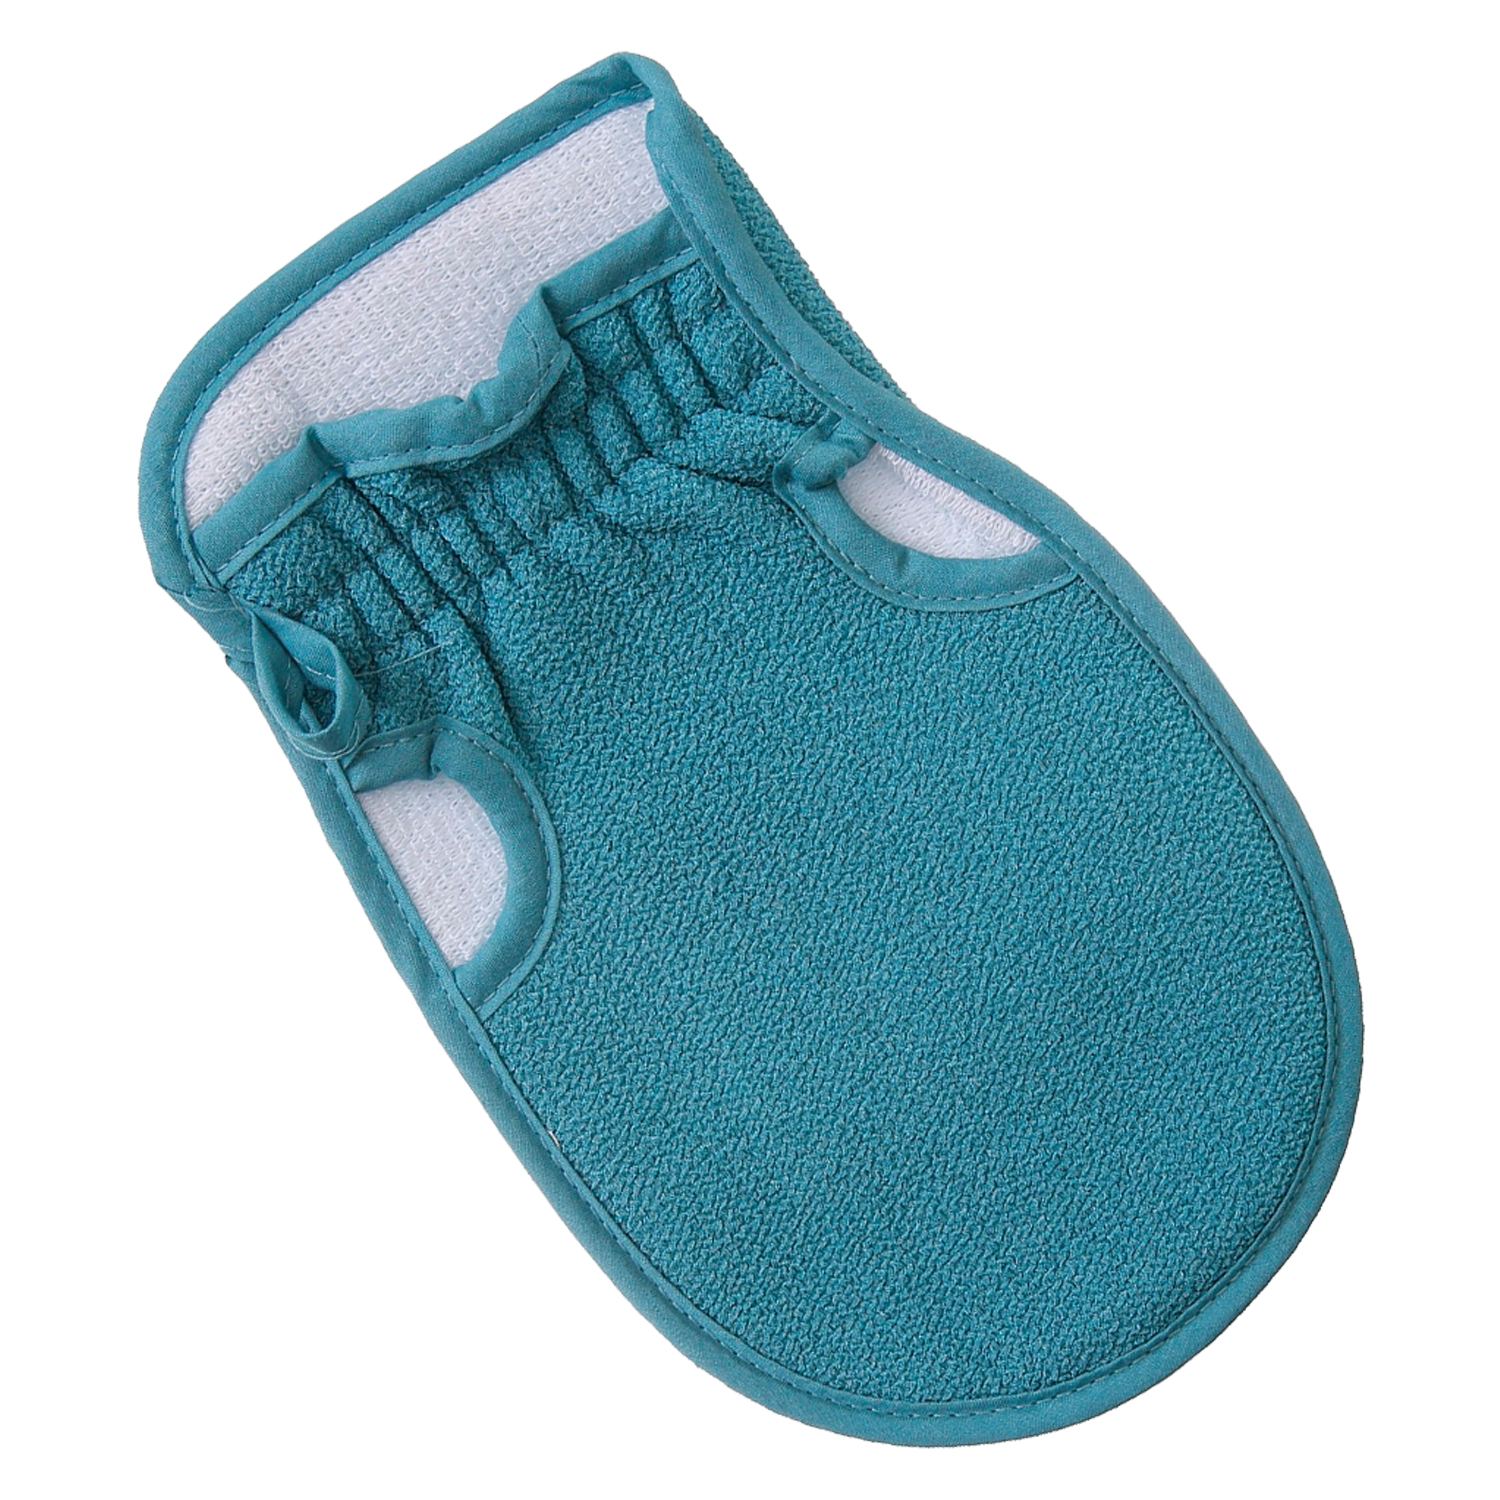 Мочалка-рукавица, VenusShape, цвет серо-голубой, 23х14 см рукавица щетка для шерсти 25 х 13 см красная